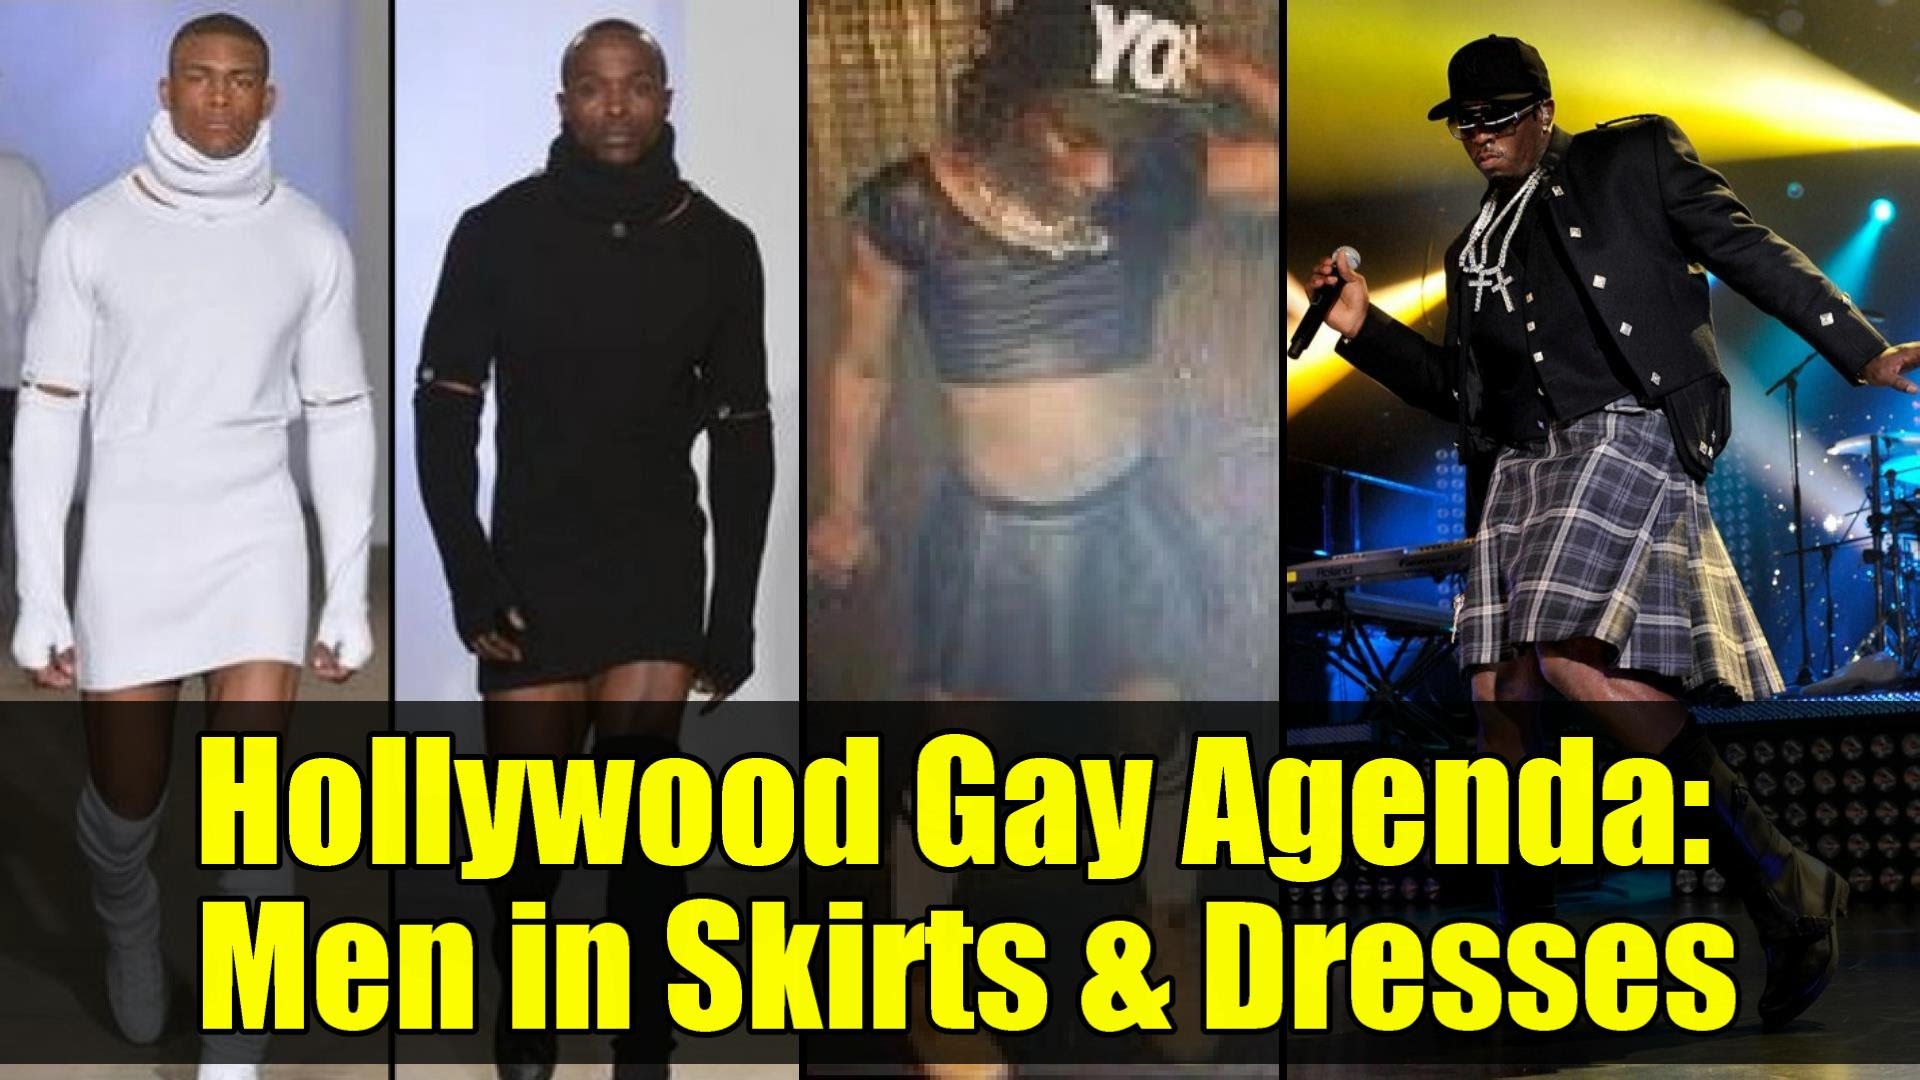 HOLLYWOOD GAY AGENDA | Men in Skirts & Dresses !!! - YouTube